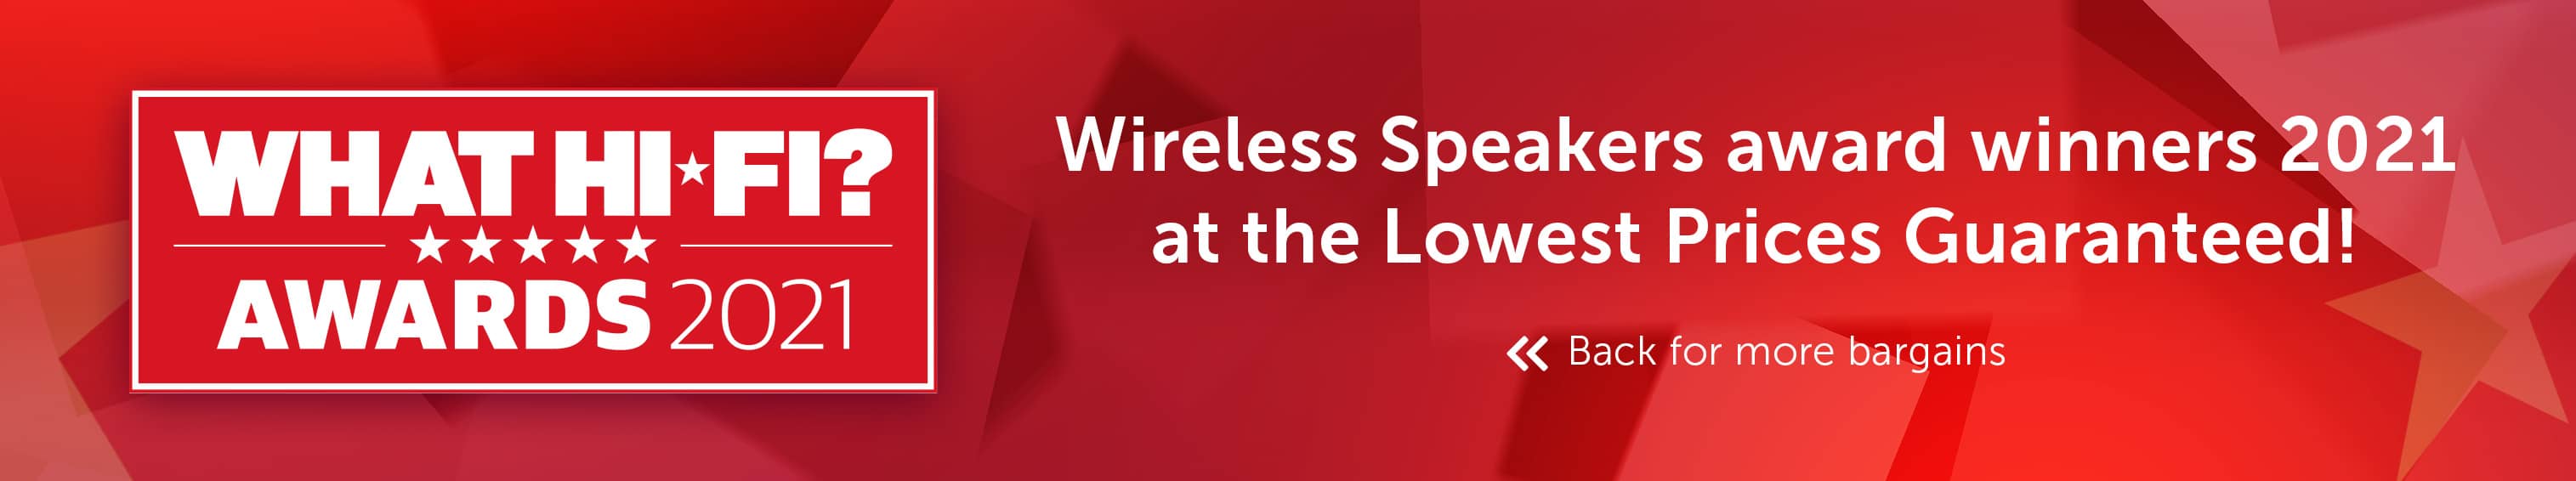 What Hi-Fi? Best Buy Awards 2021 - Wireless Speakers